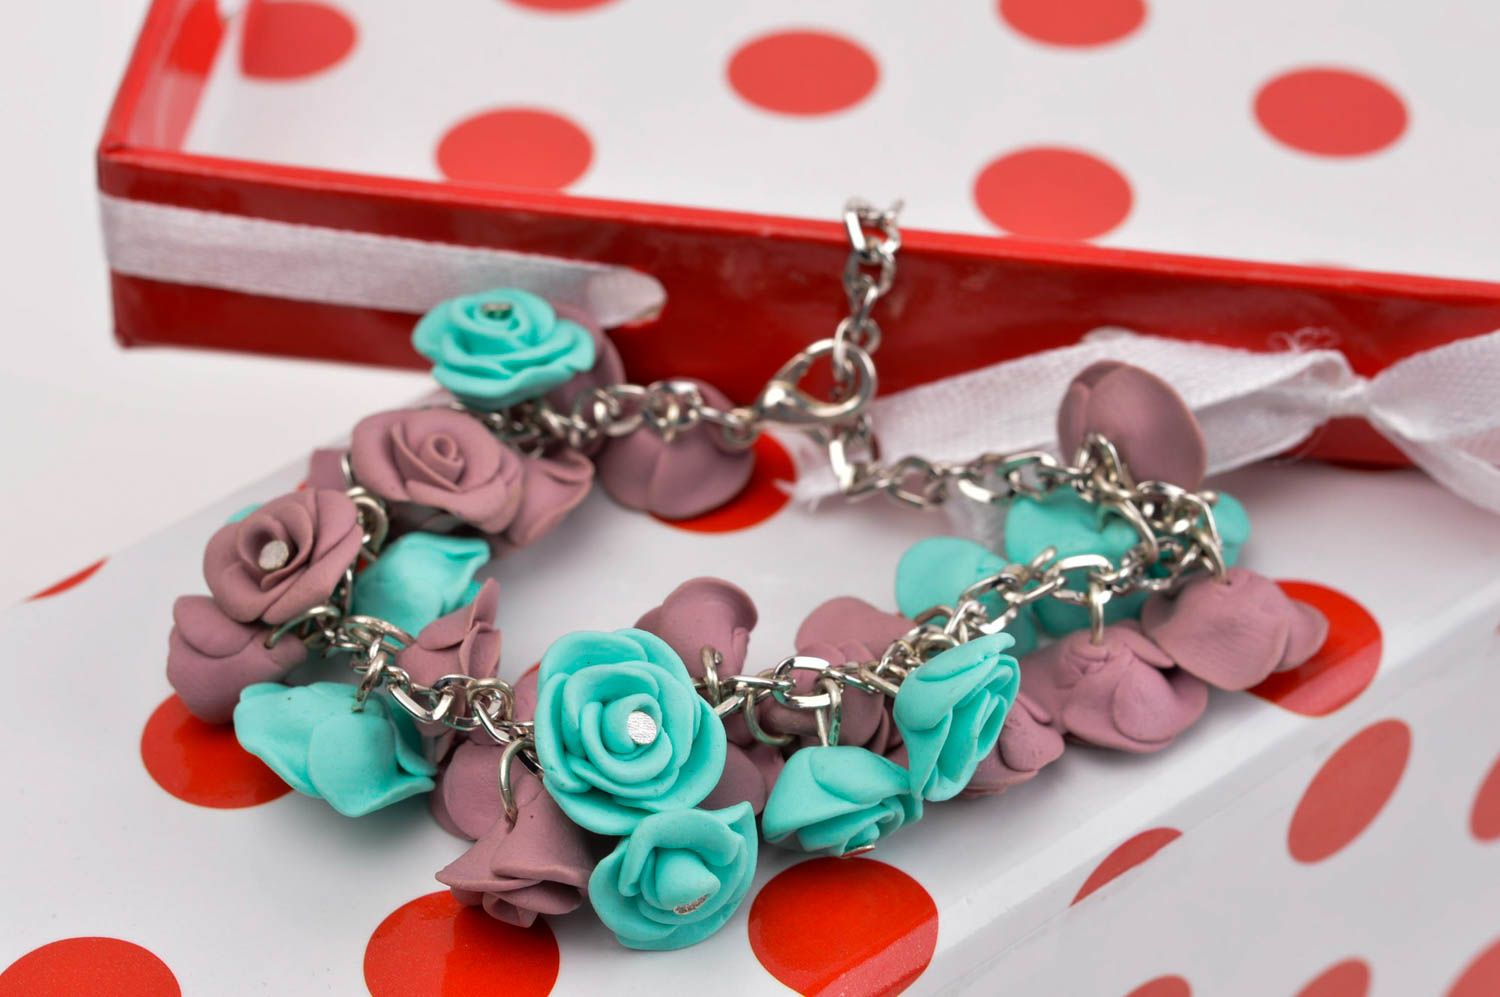 Handmade bracelet flower bracelet clay accessory designer jewelry gift ideas photo 1